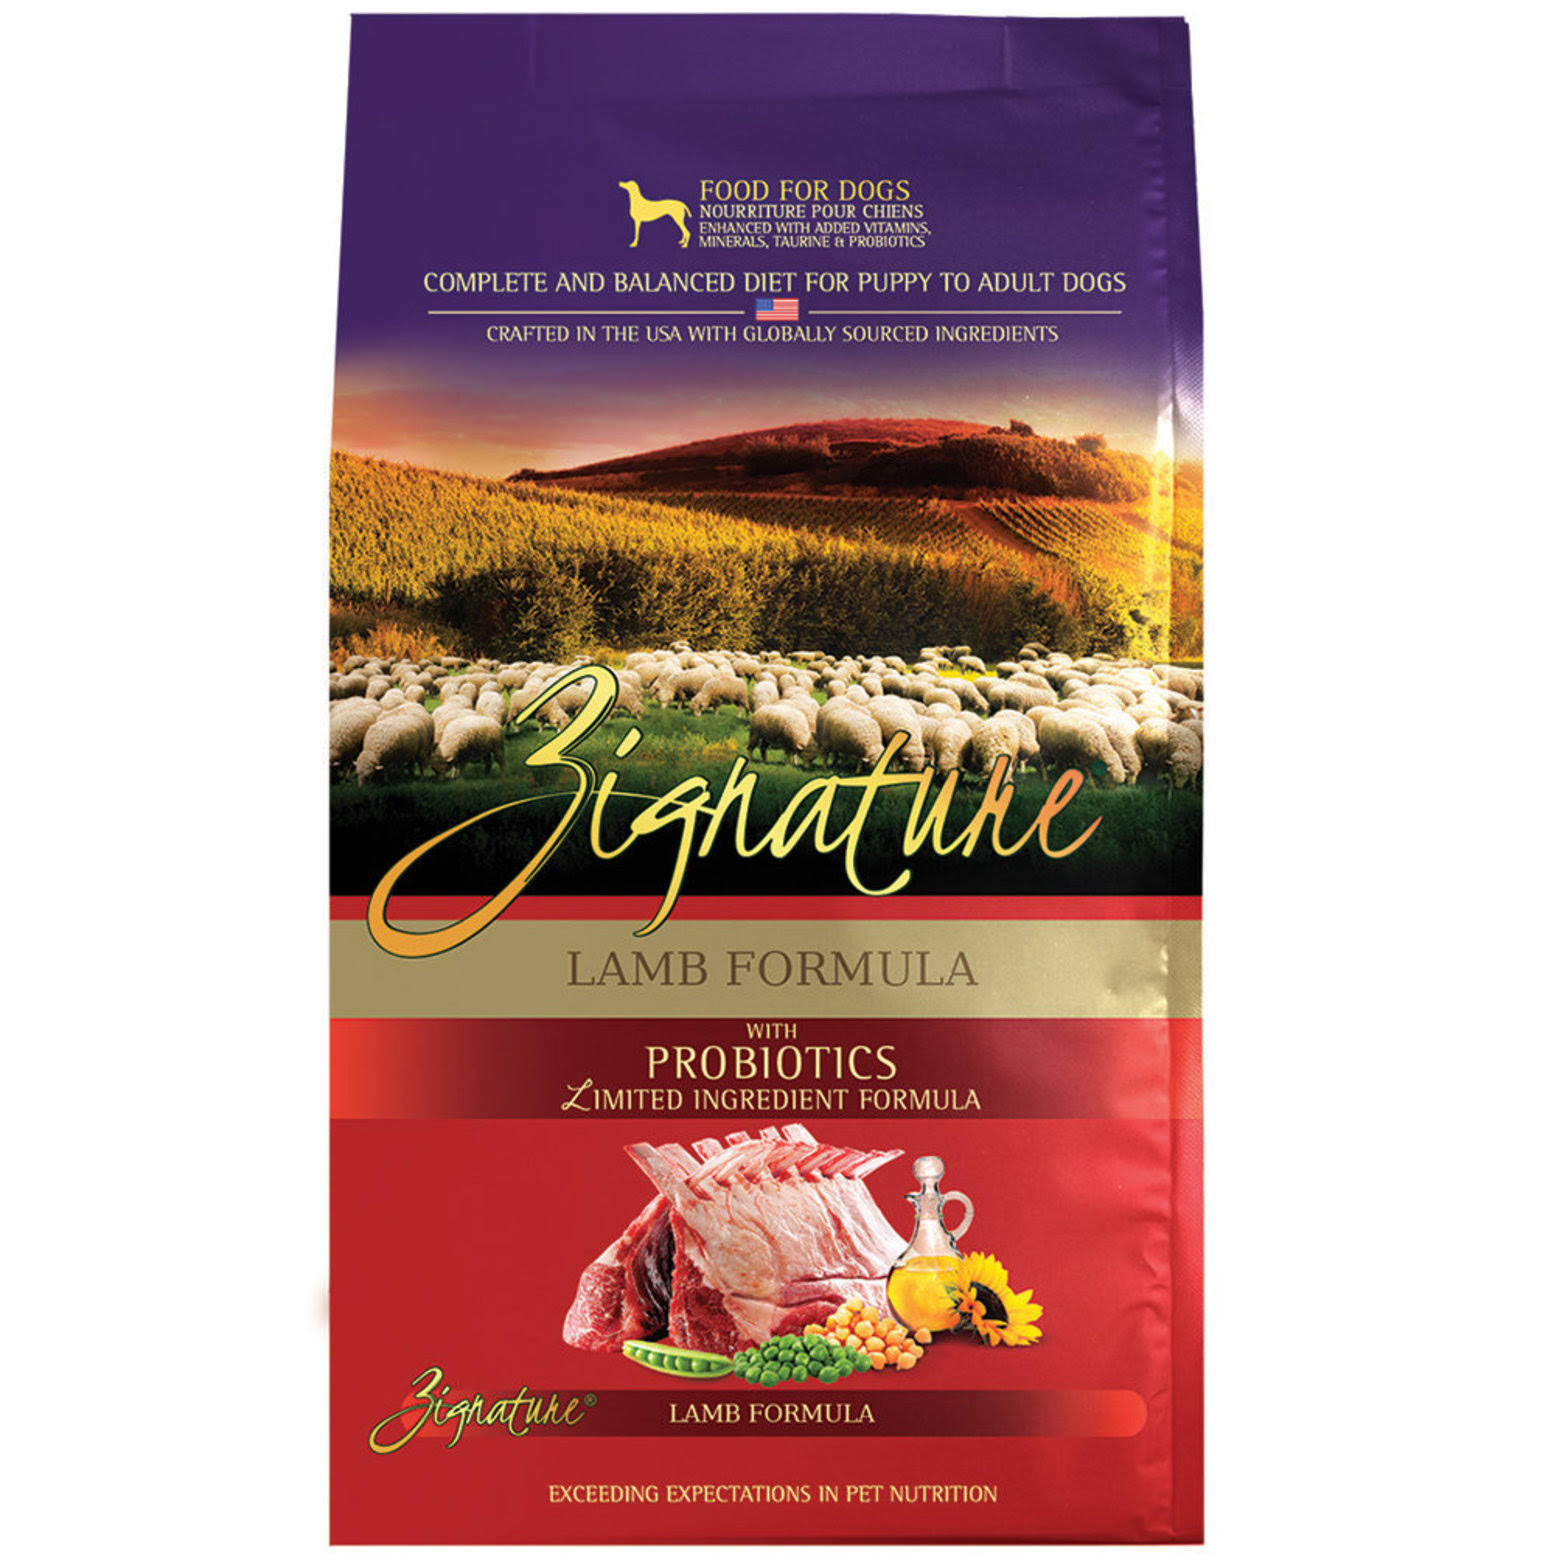 Lamb Limited Ingredient Formula Dry Dog Food - Zignature